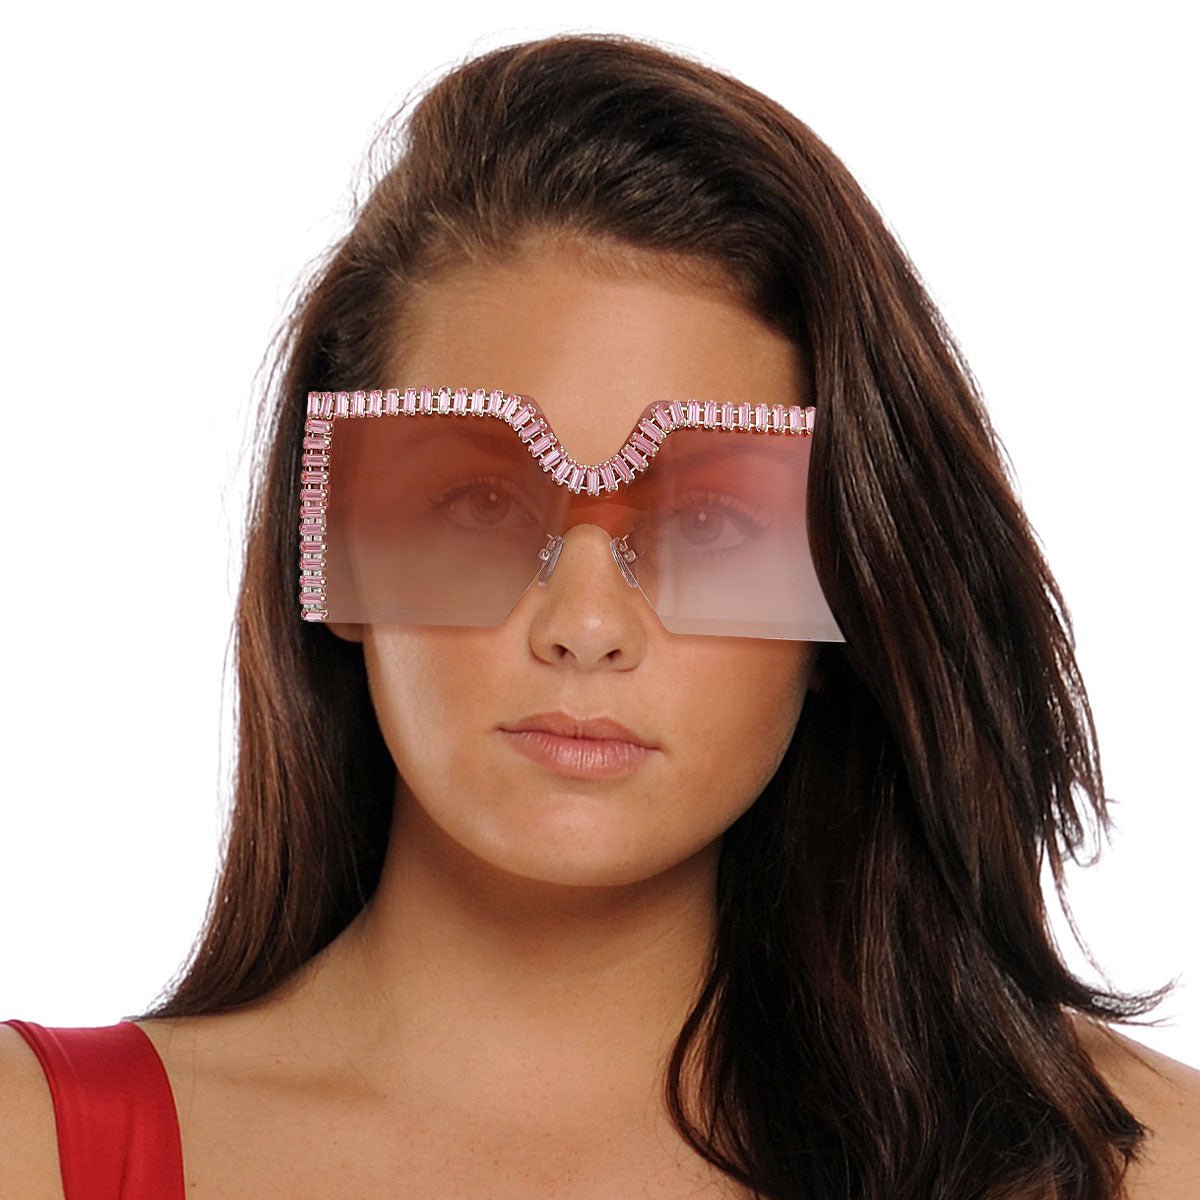 Pink Baguette Stone Square Sunglasses